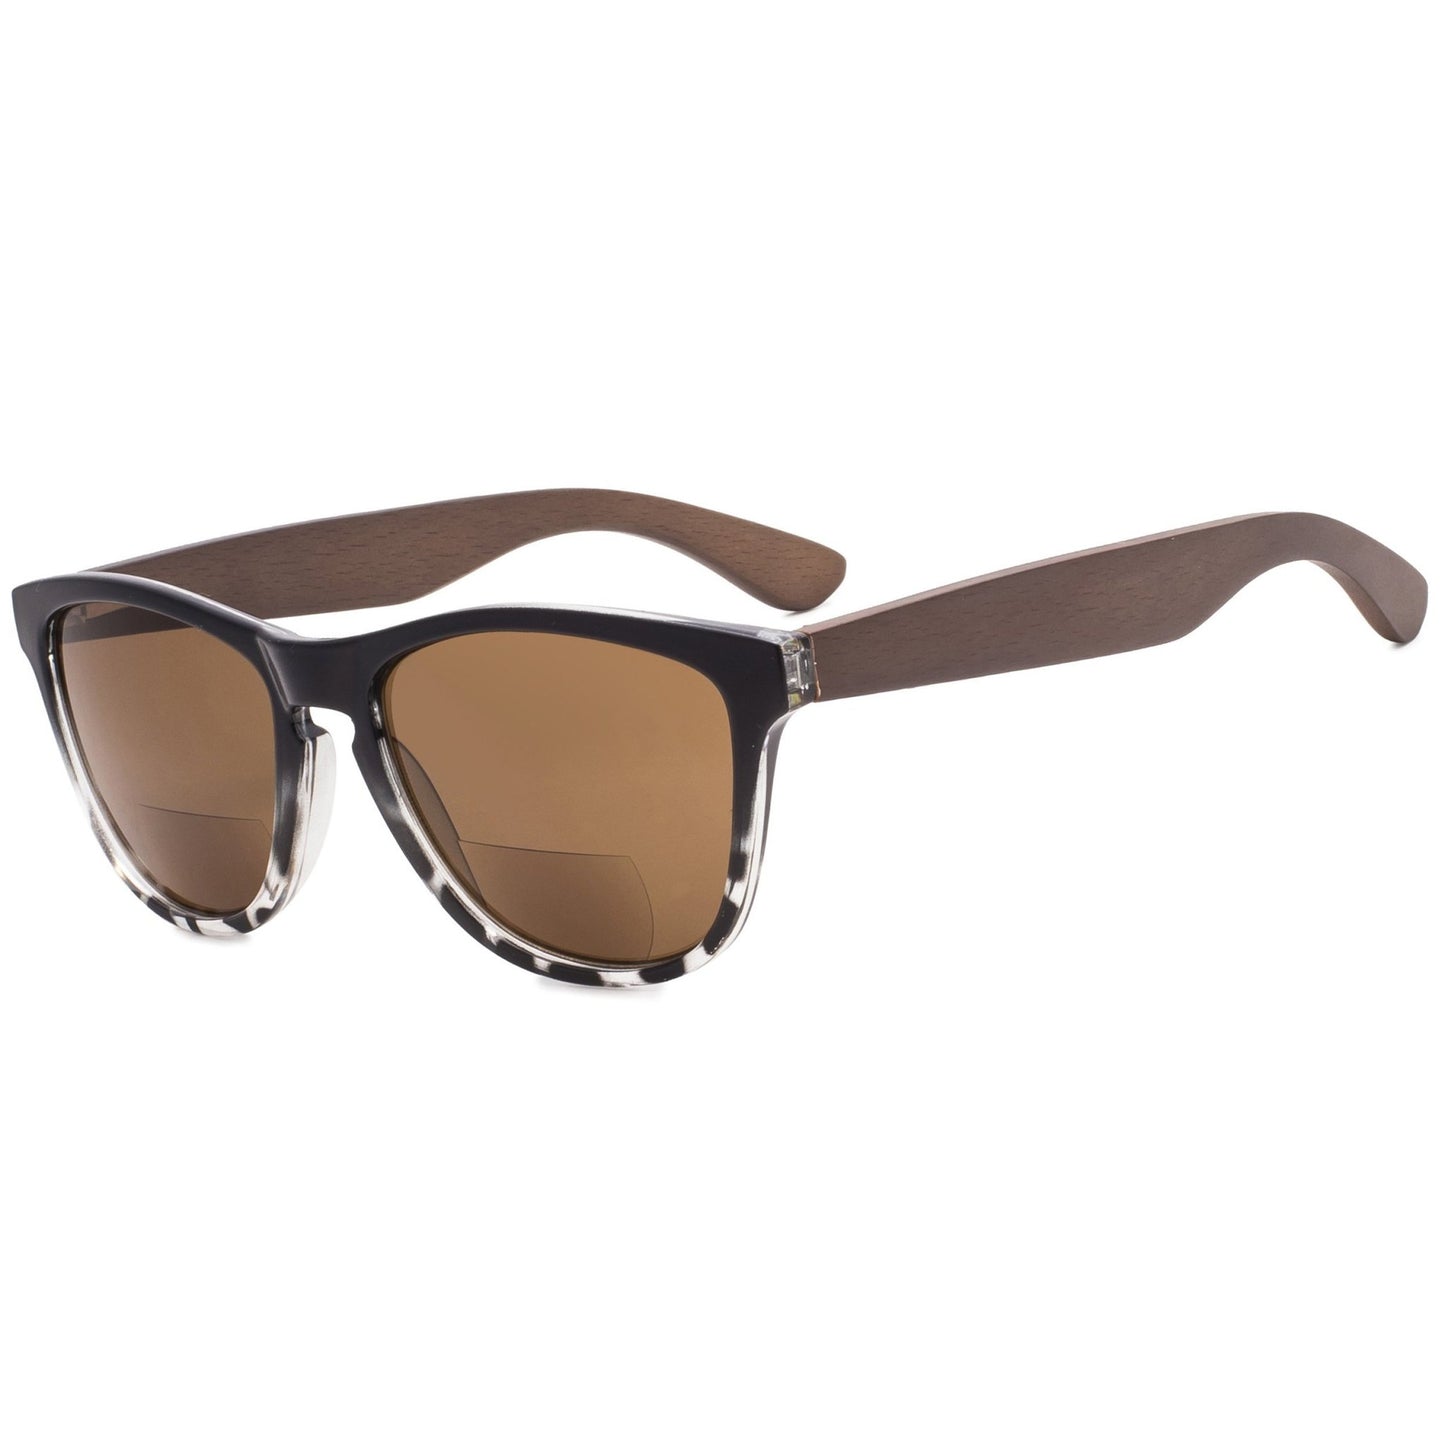 Oval Bifocal Sunglasses Black White Tortoise SGH001-6